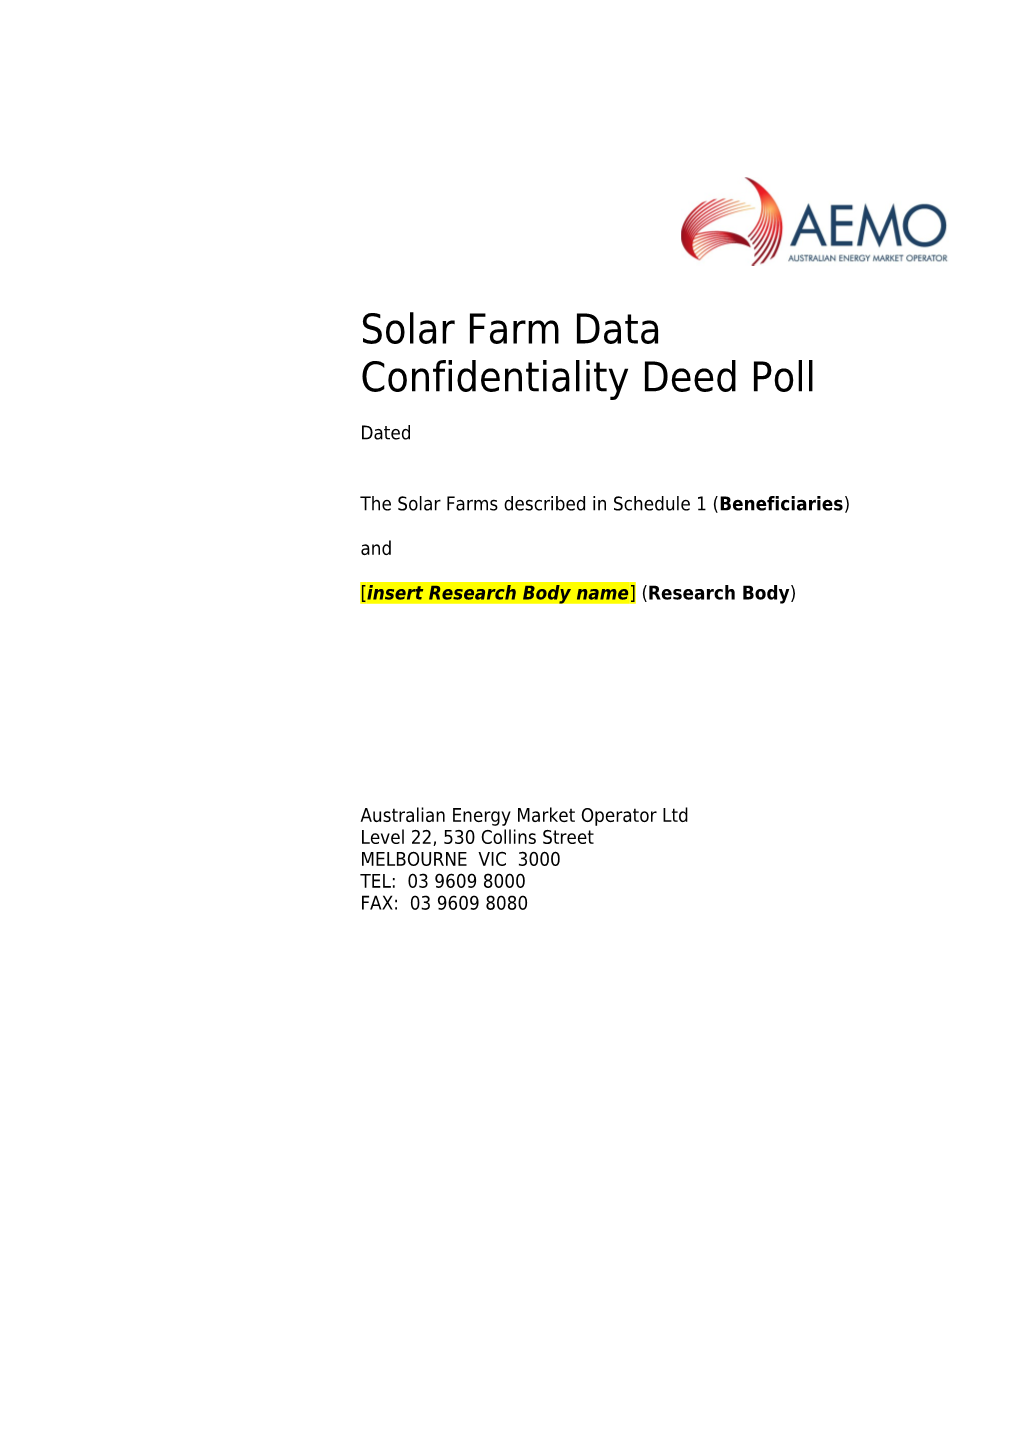 Annexure - Solar Farm Data Confidentiality Deed Poll Final